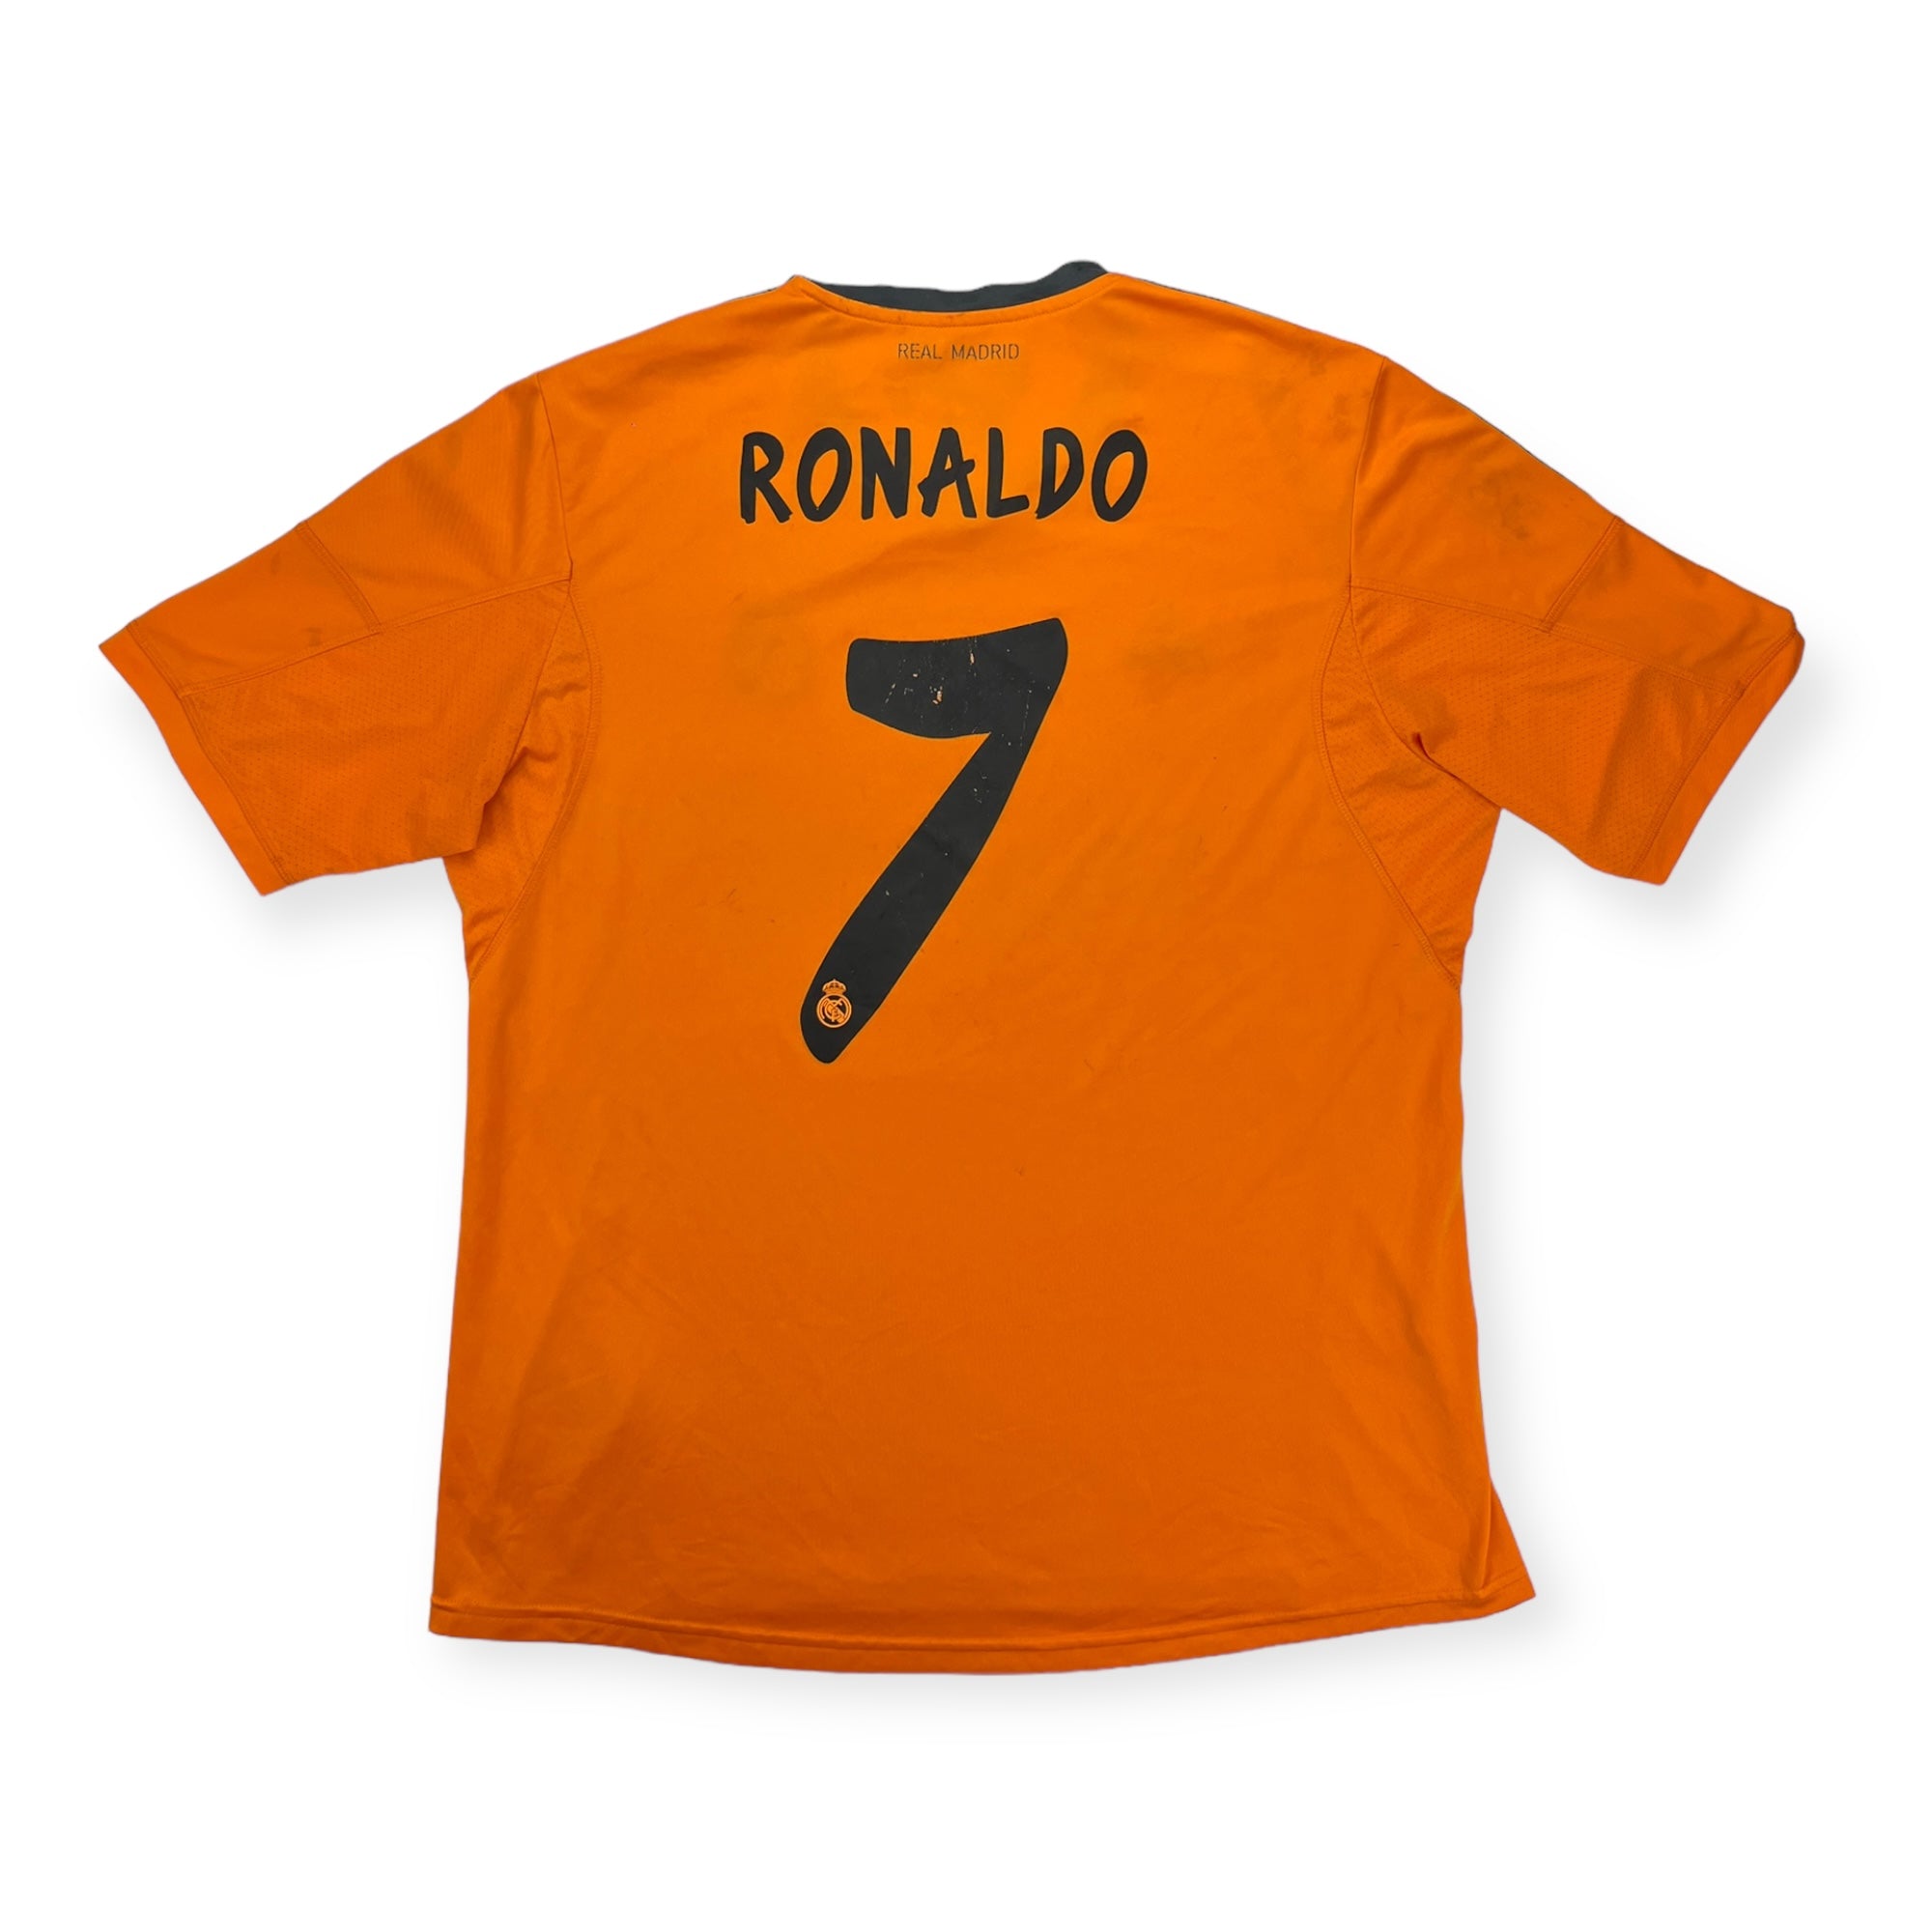 Real Madrid 2013 Third Shirt, Ronaldo 7